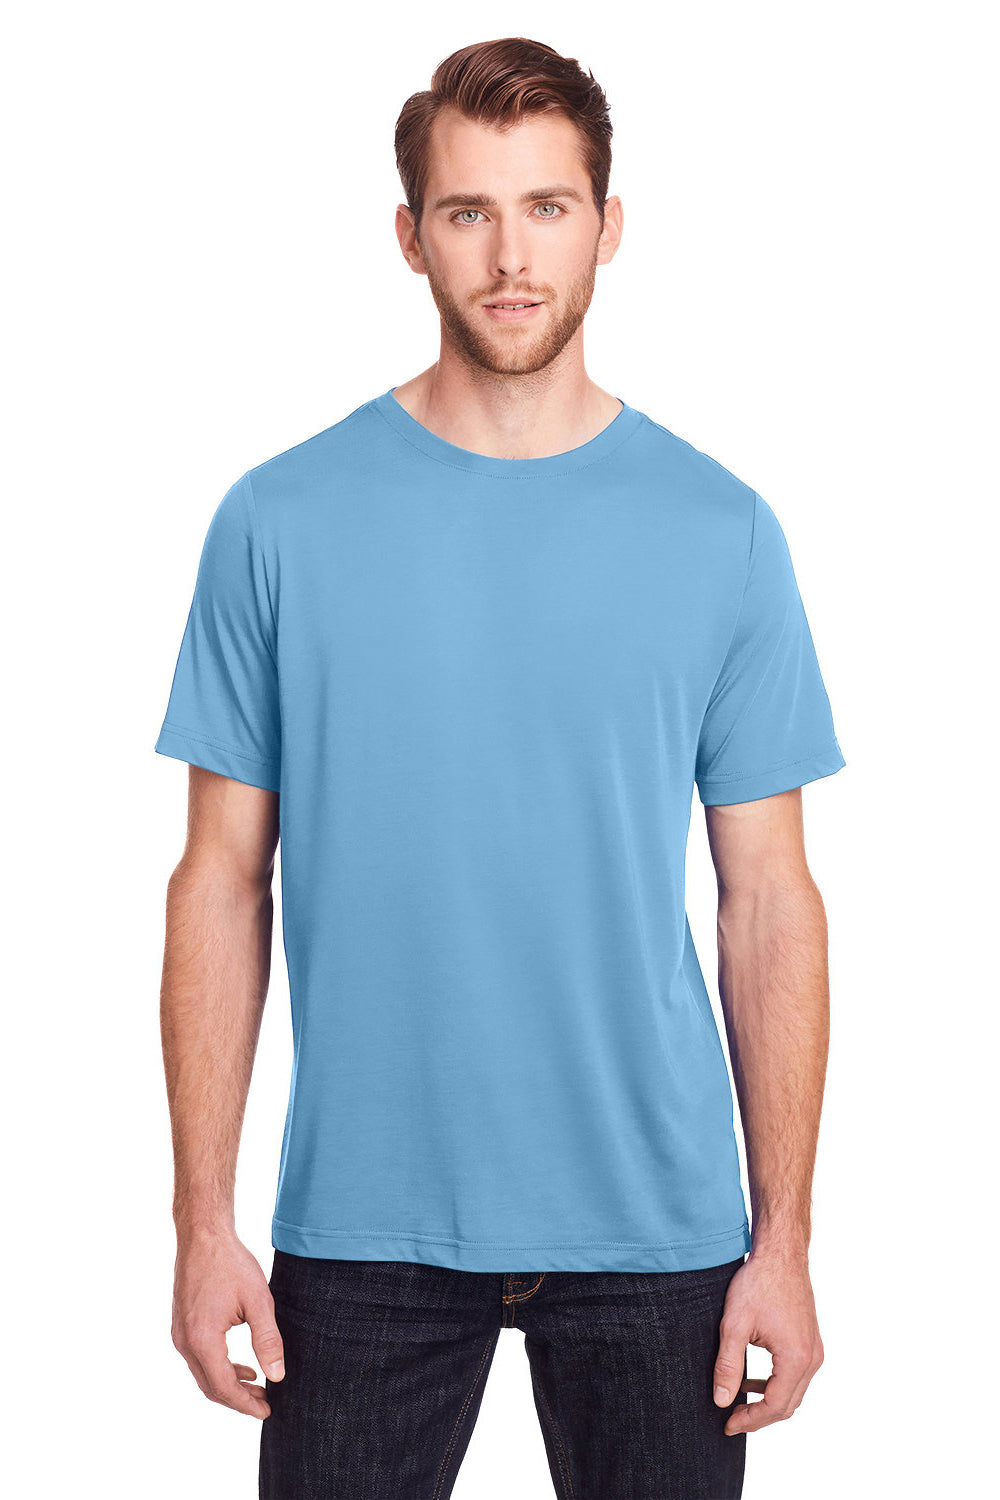 Core 365 CE111 Mens Fusion ChromaSoft Performance Moisture Wicking Short Sleeve Crewneck T-Shirt Columbia Blue Front